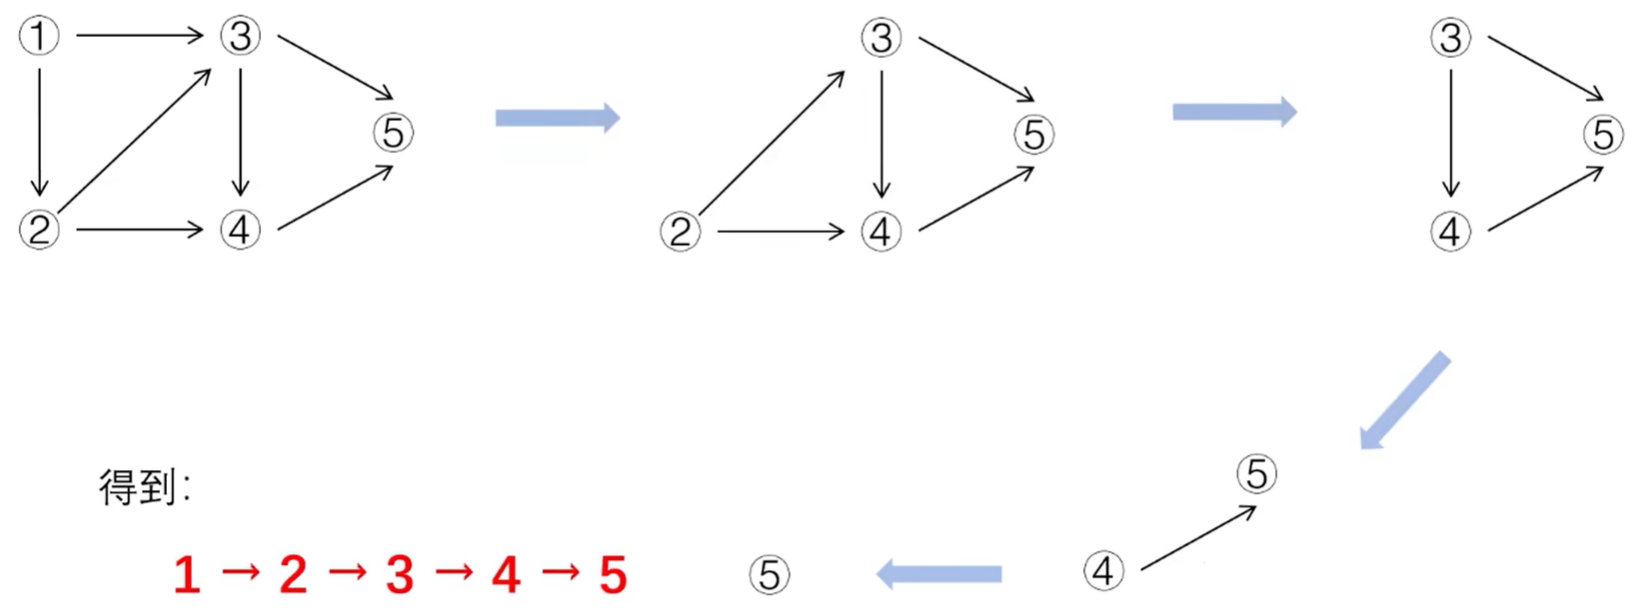 Topological sorting step diagram